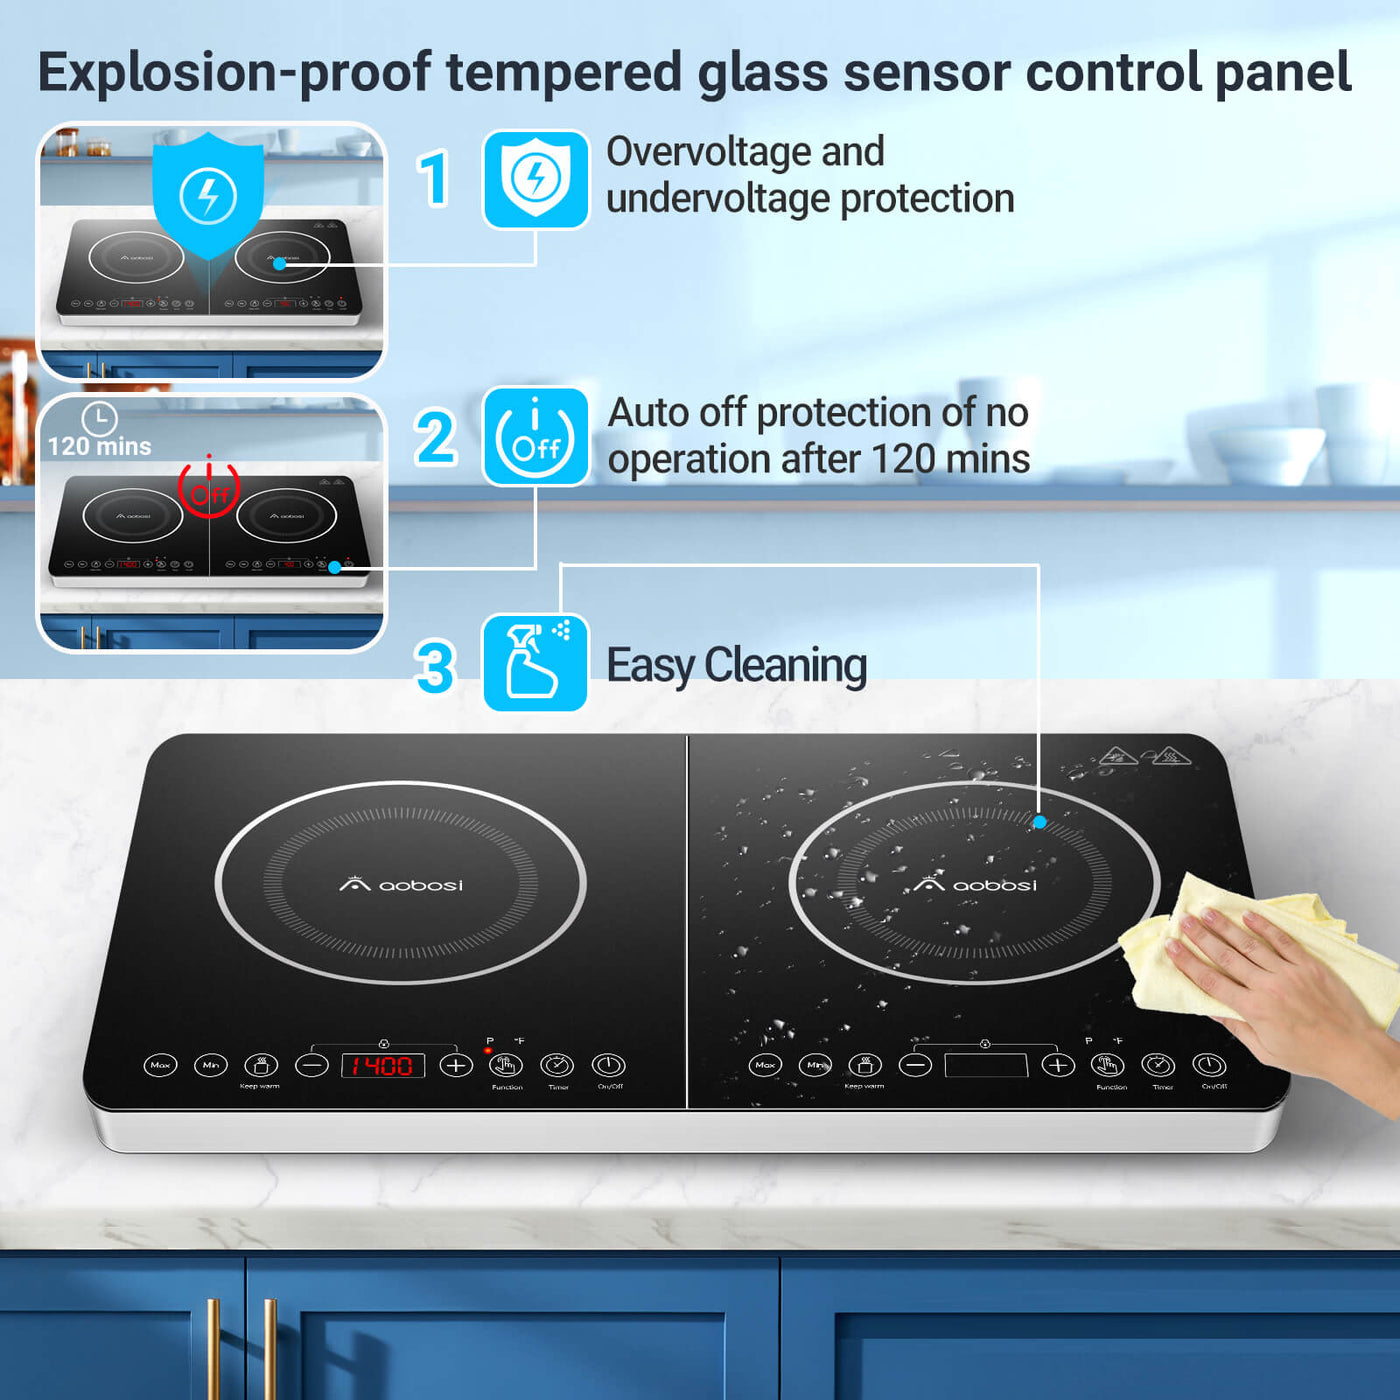 Explosion-proof tempered glass sensor control panel